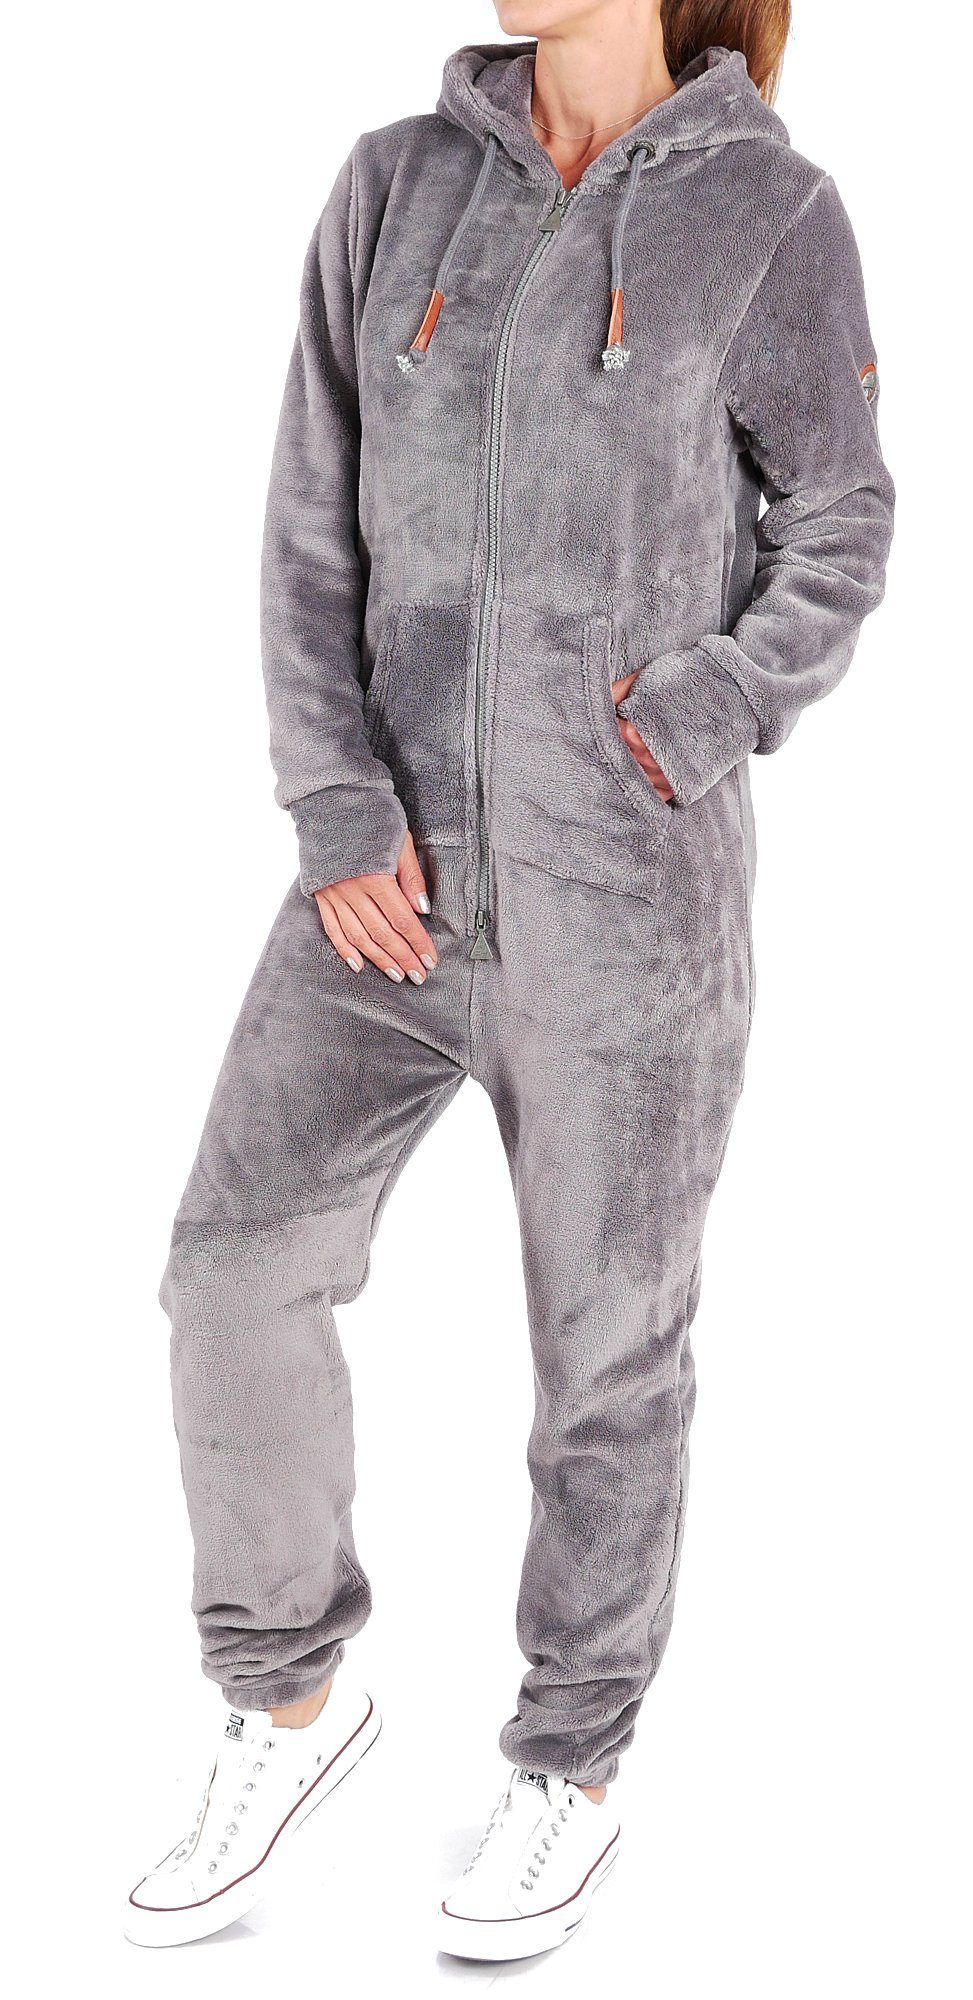 Finchgirl Jumpsuit »Finchgirl F2001 Damen Jumpsuit Teddy Fleece Einteiler  Overall Anzug Flauschig« online kaufen | OTTO